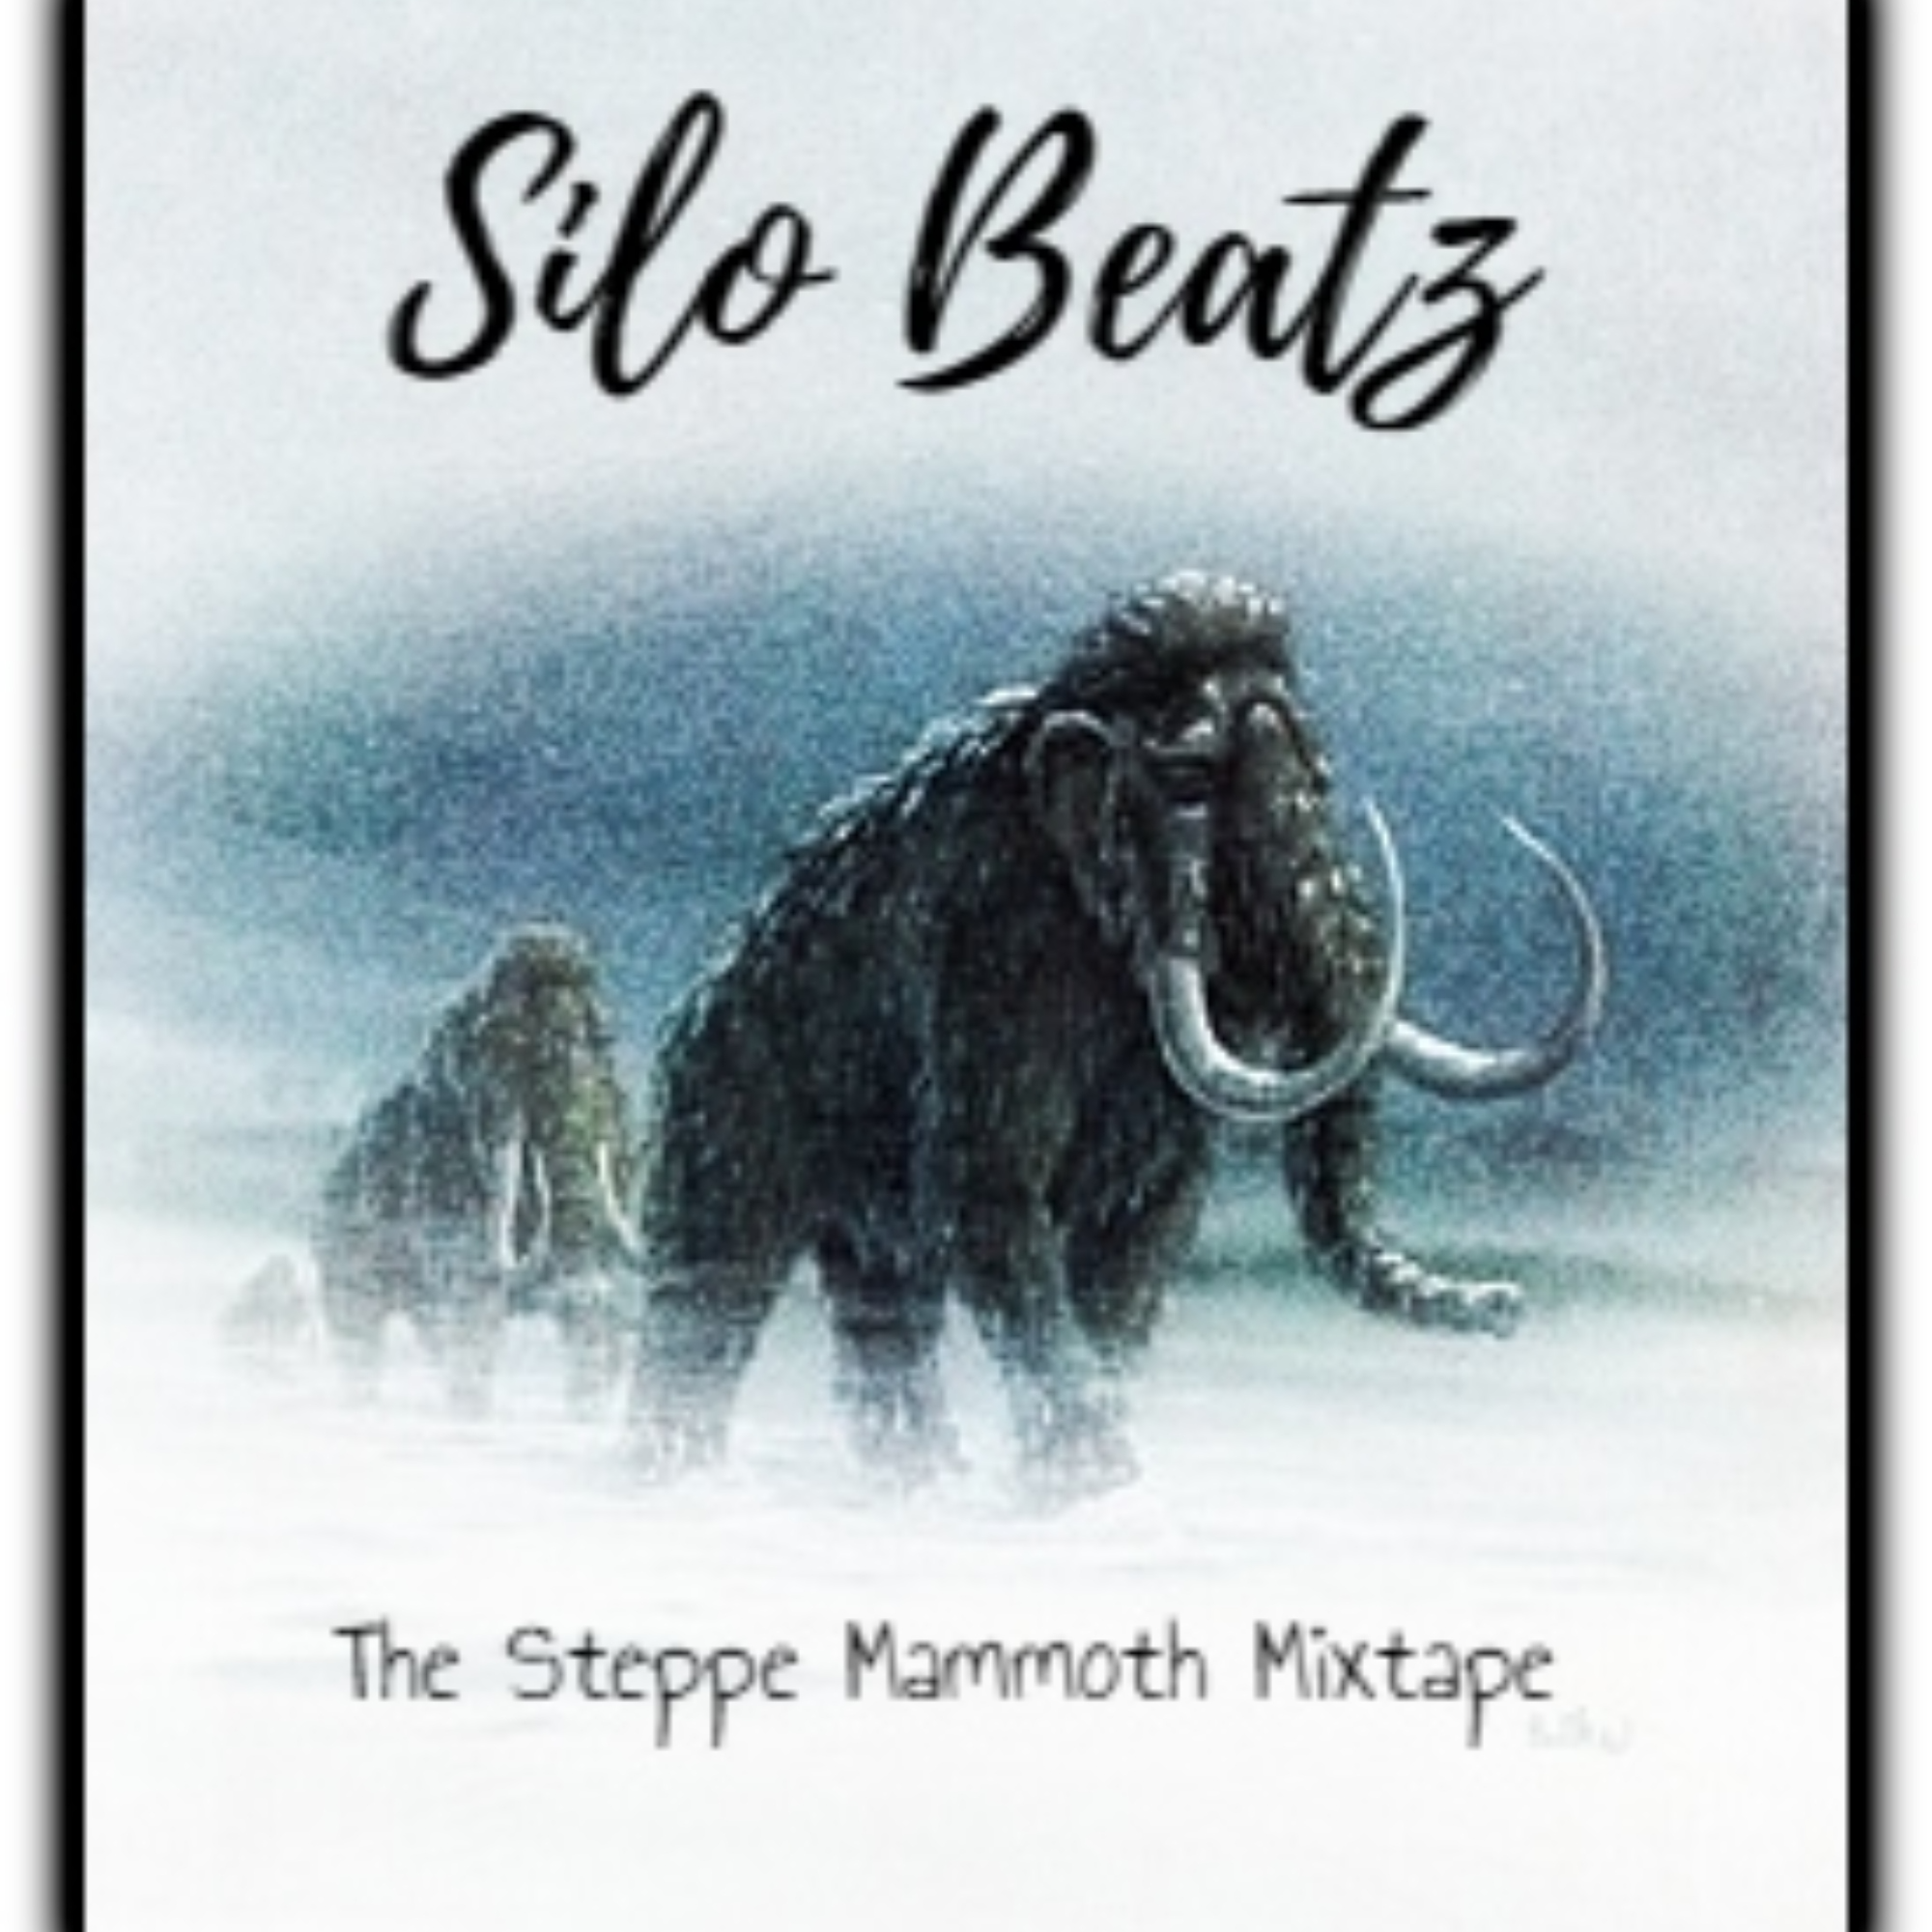 Silo Beatz - The Steppe Mammoth Mixtape Cover Art